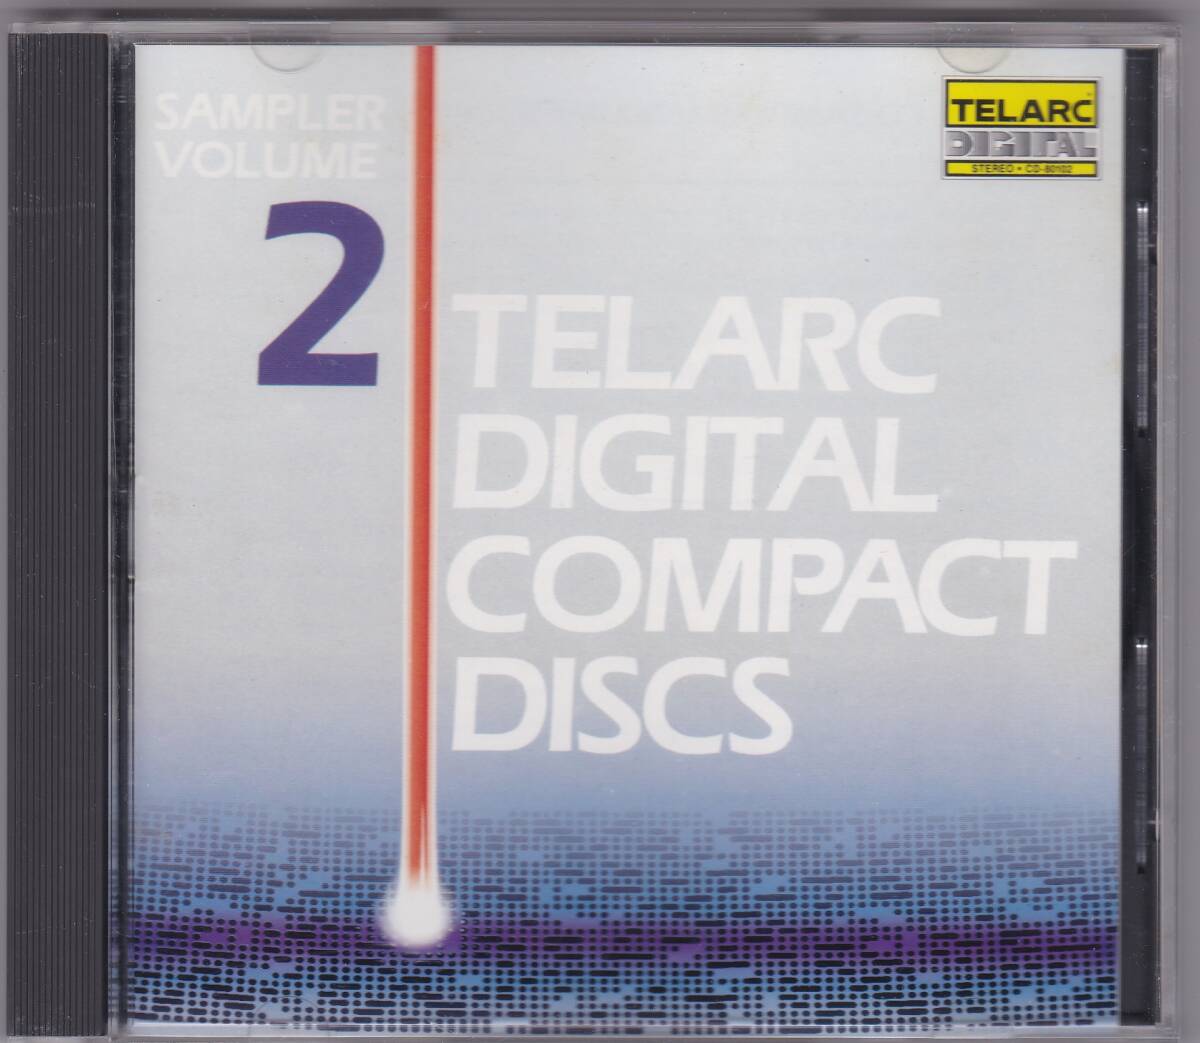 ♪TELARC初期盤♪SAMPLER Vol,２ TELARC DIGITAL COMPACT DISCS 松下電器産業プレス！の画像1